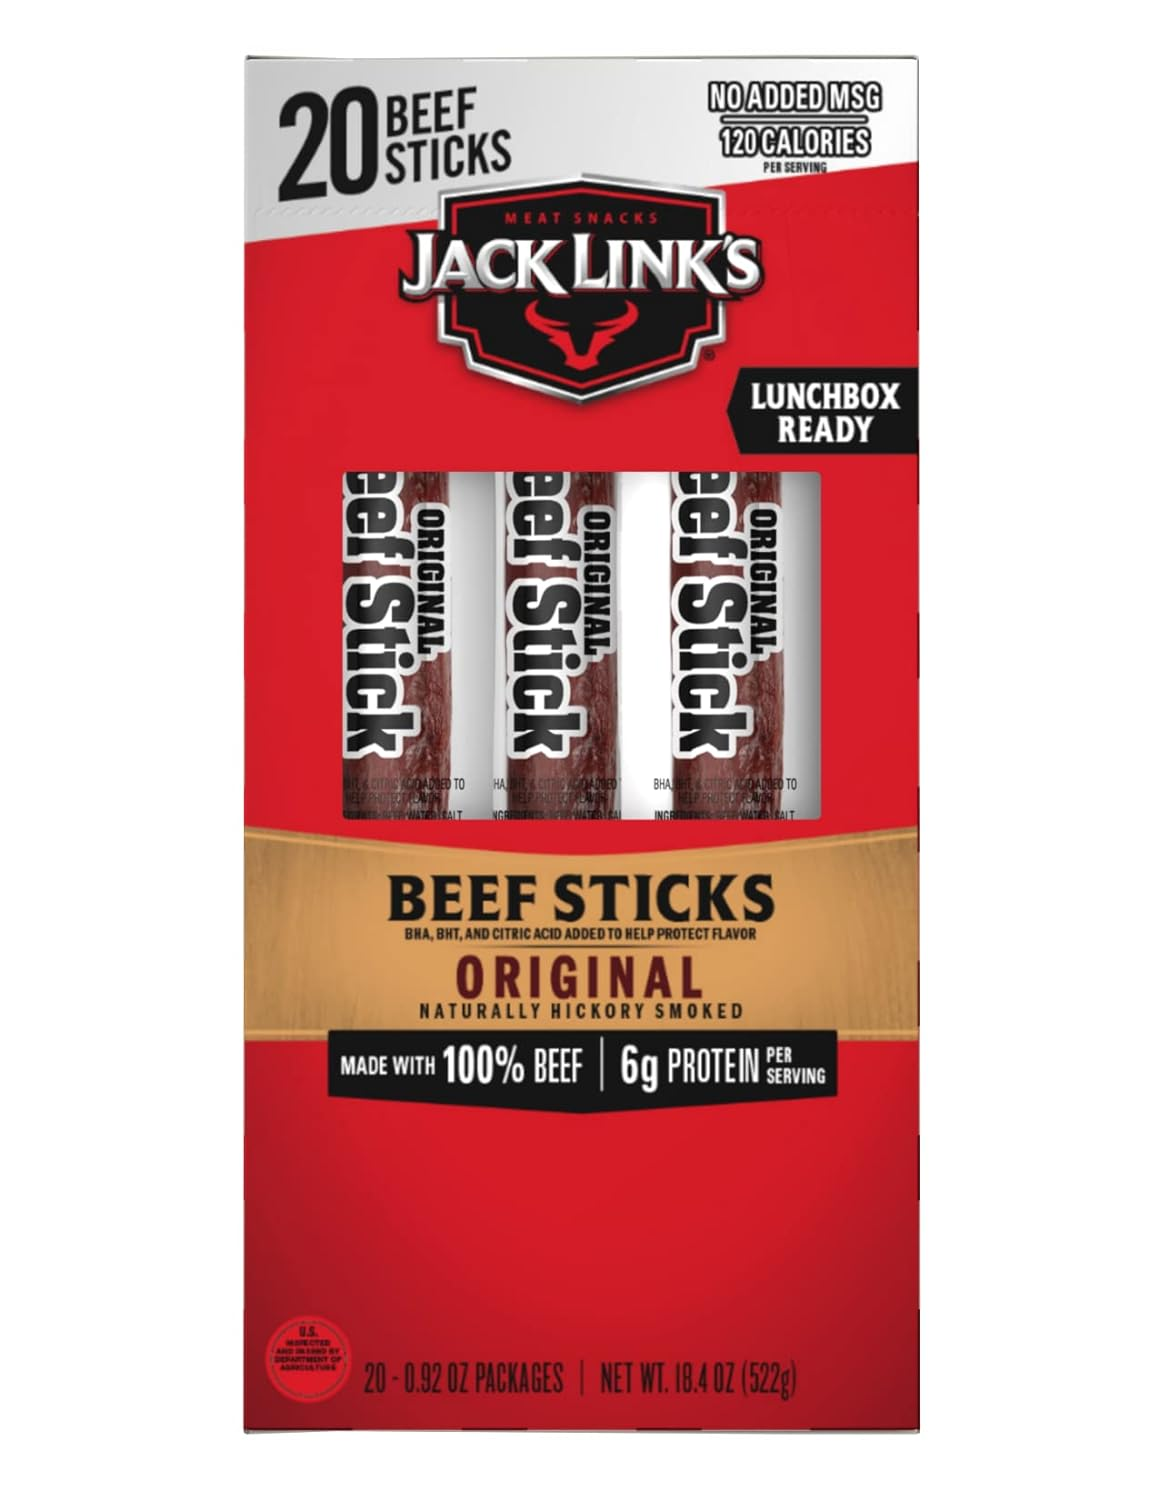 Amazon.com: Jack Link's Original Beef Sticks – 0.92 Oz. (20 Count) $9.74